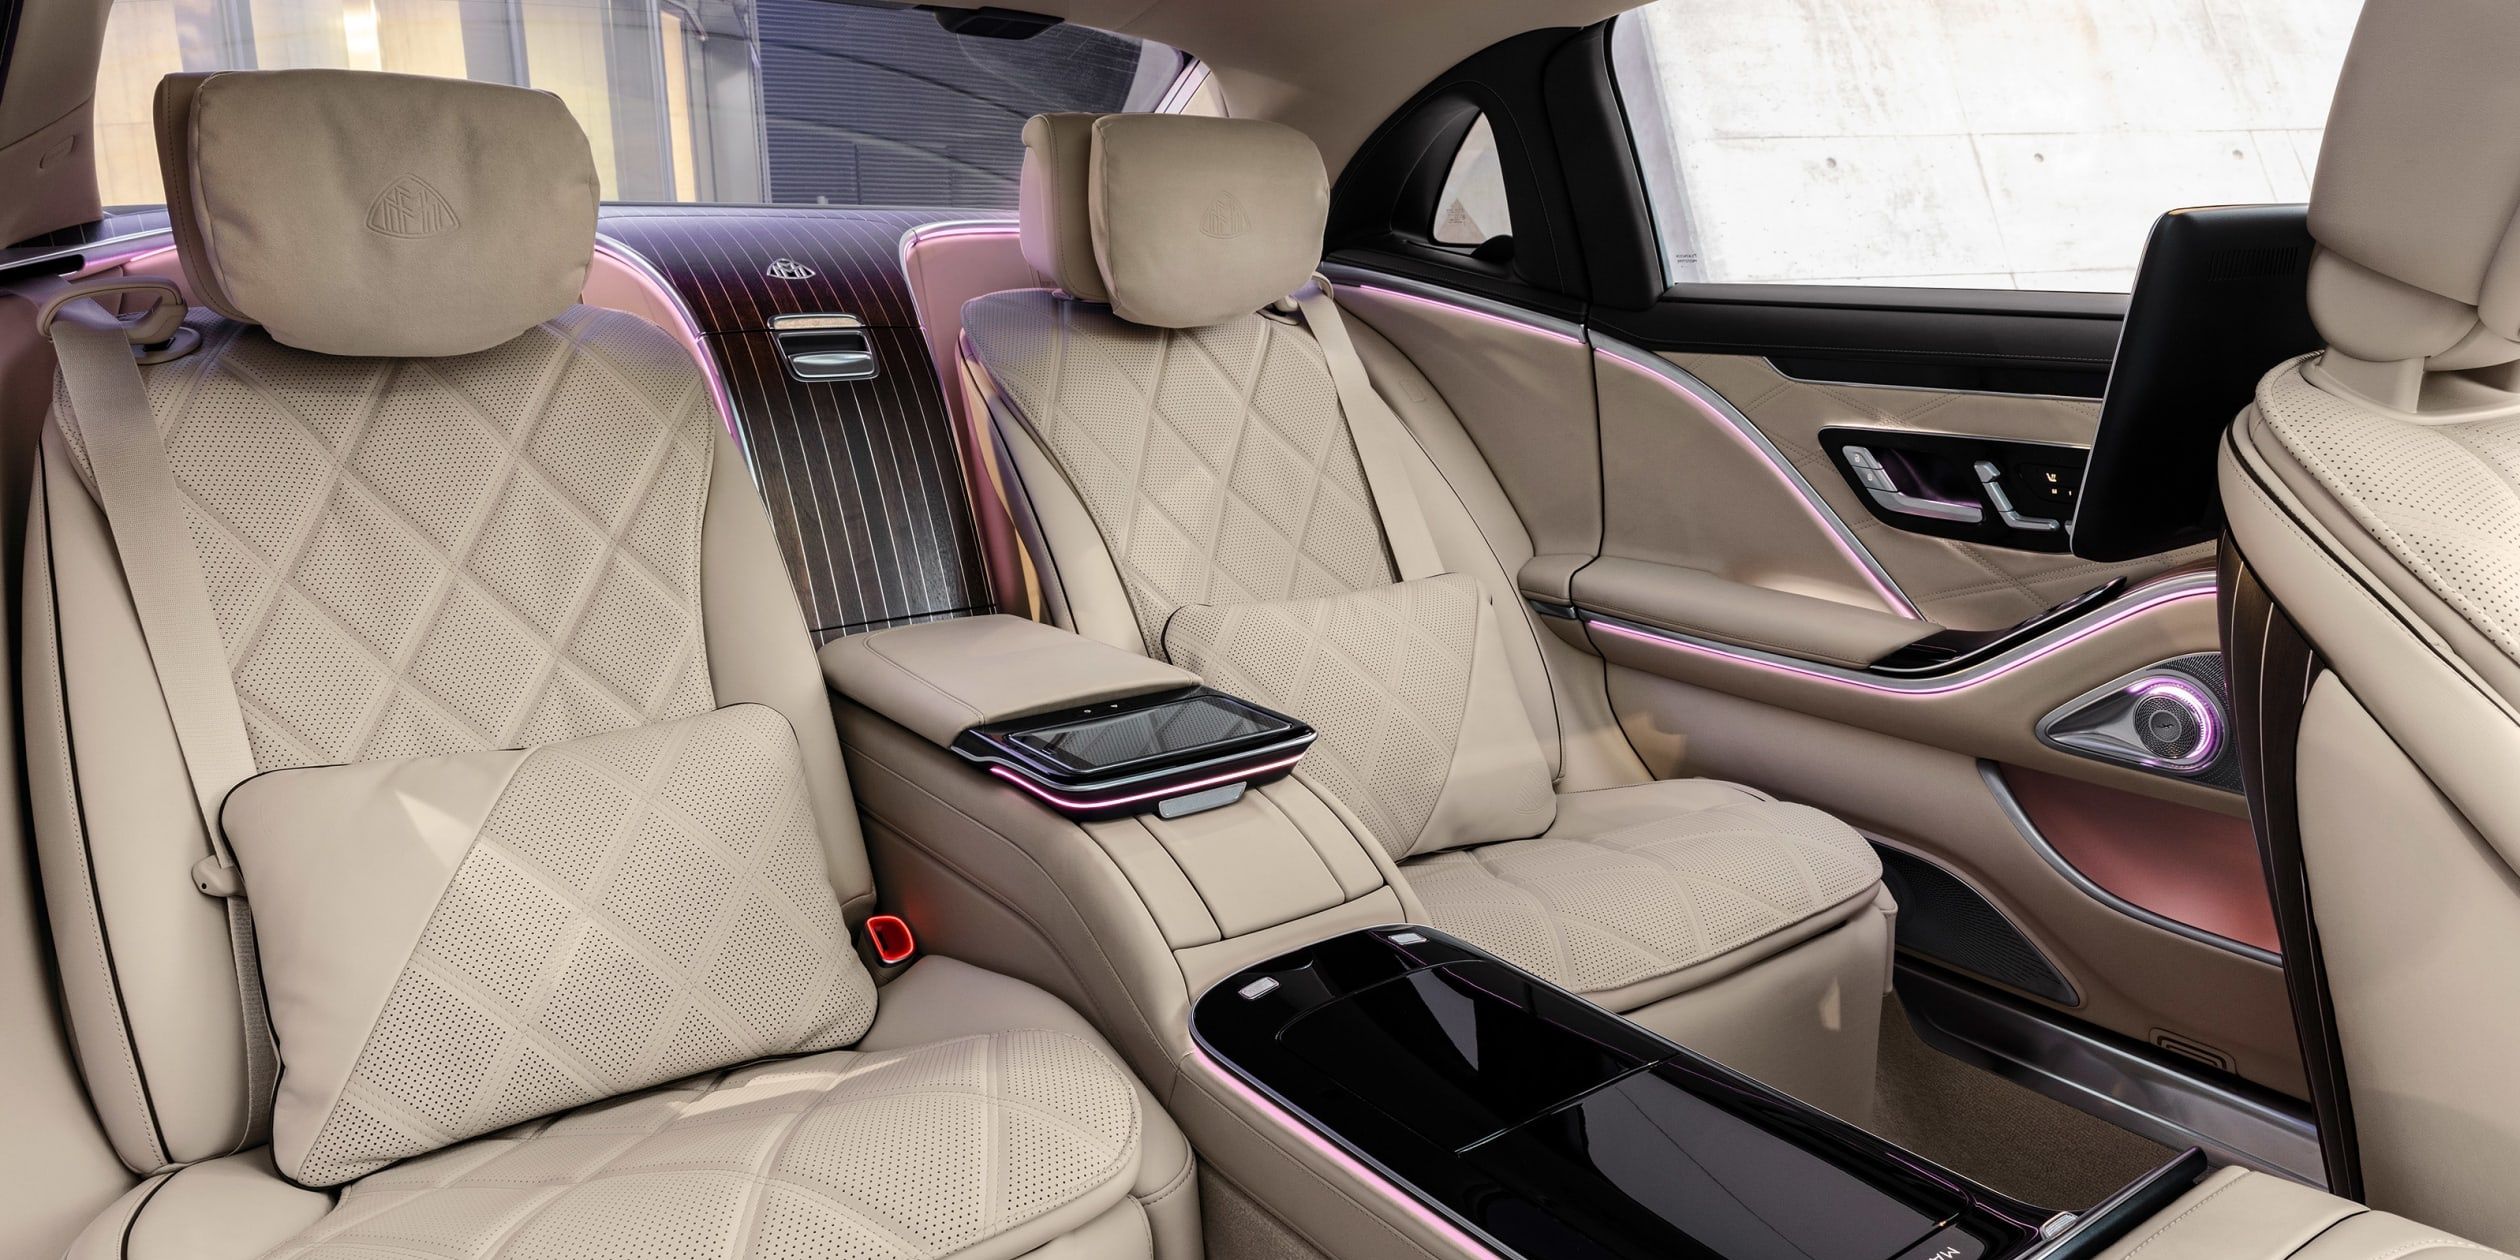 Mercedes Maybach S Class Interior